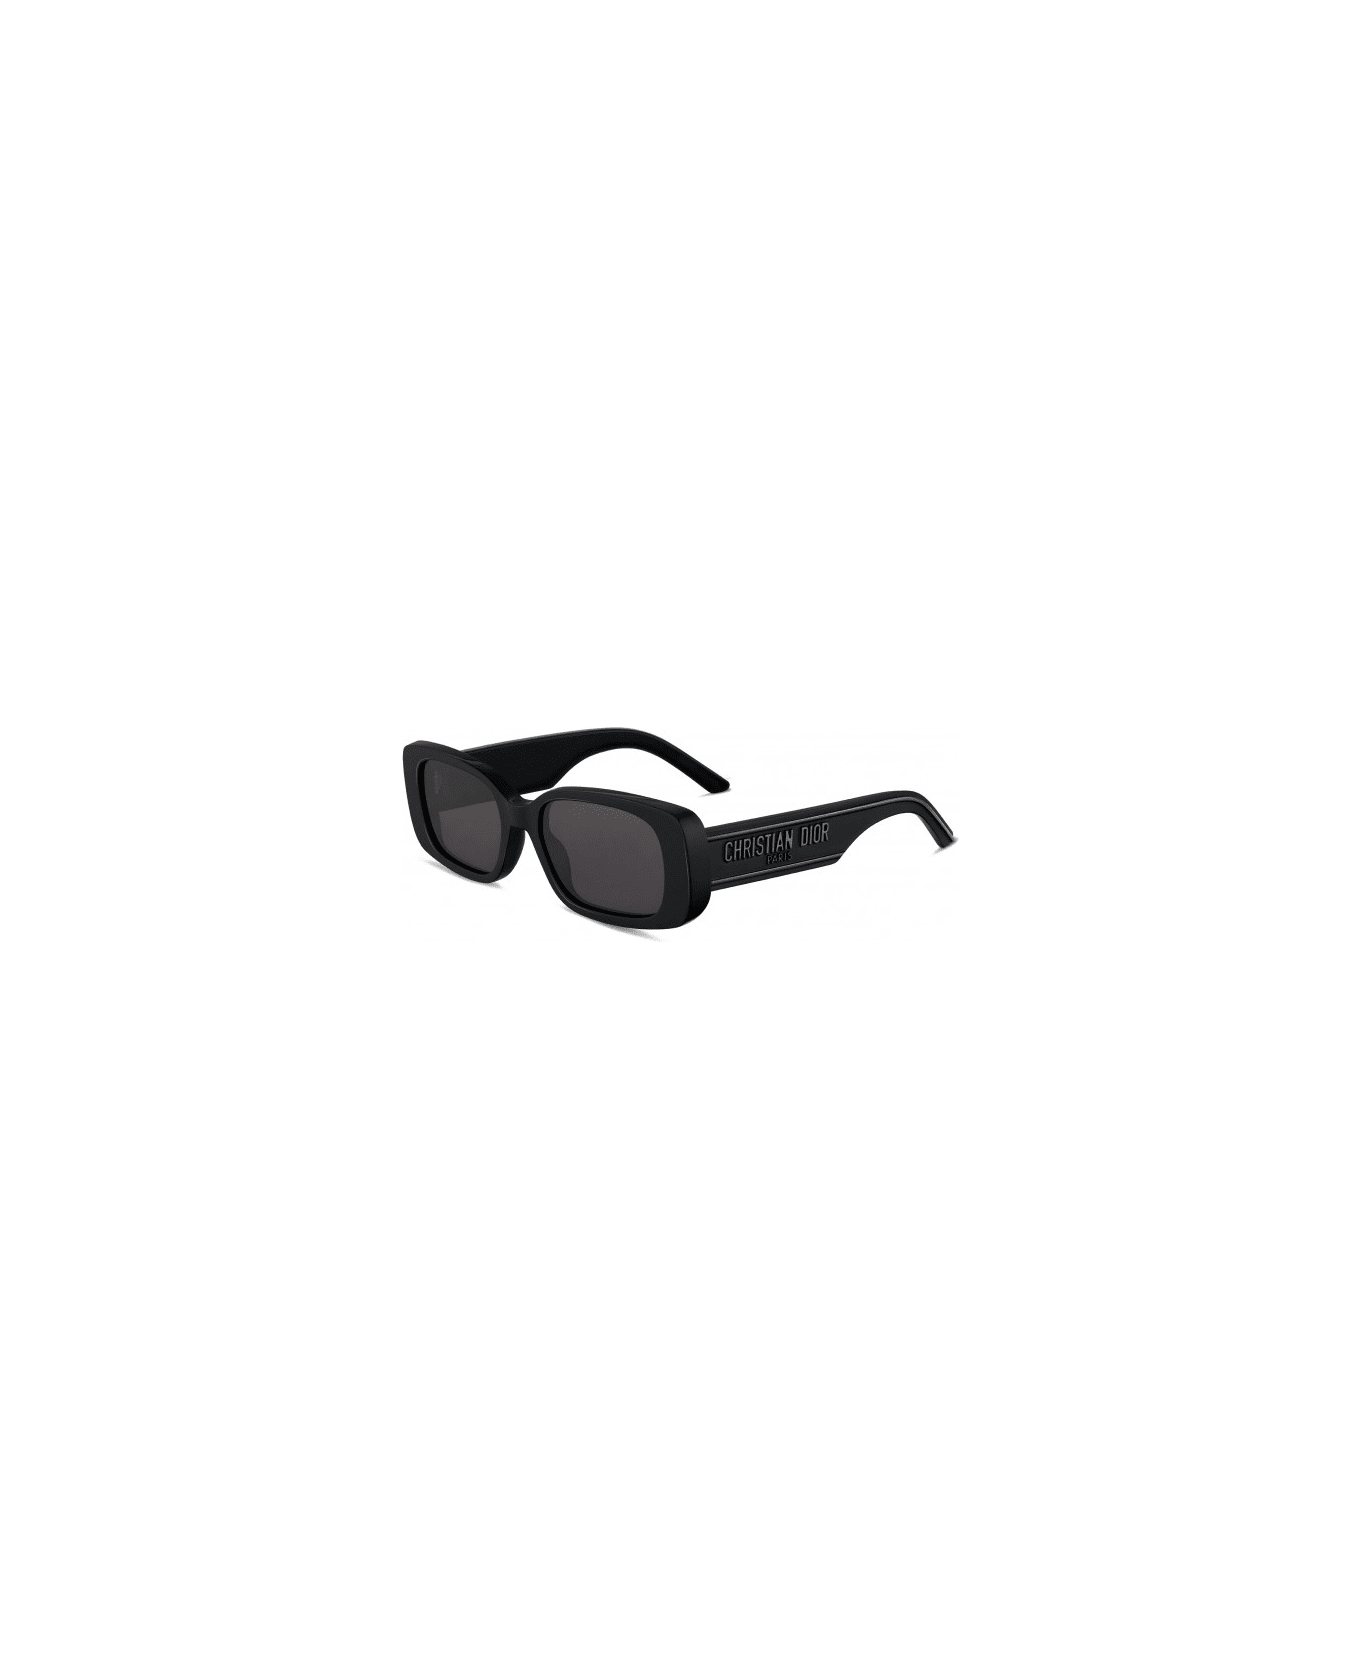 Dior Eyewear Sunglasses - Nero/Nero サングラス